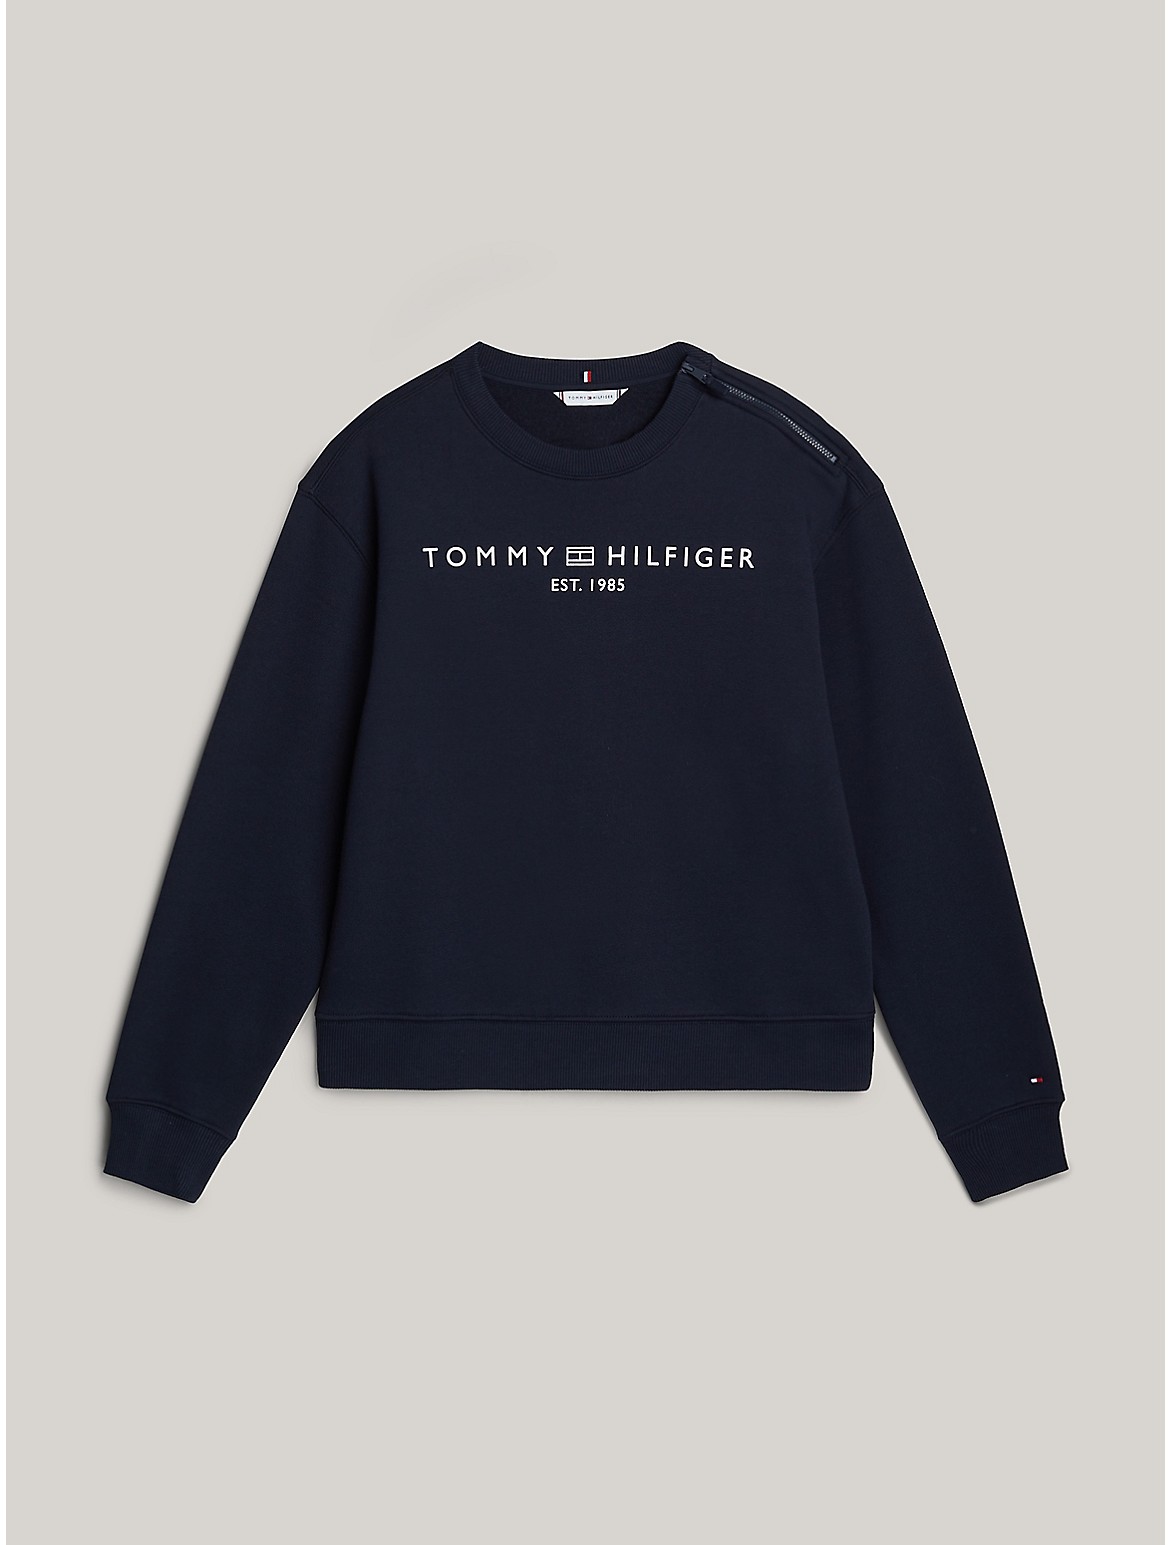 Tommy Hilfiger Women's Hilfiger Logo Sweatshirt - Blue - L